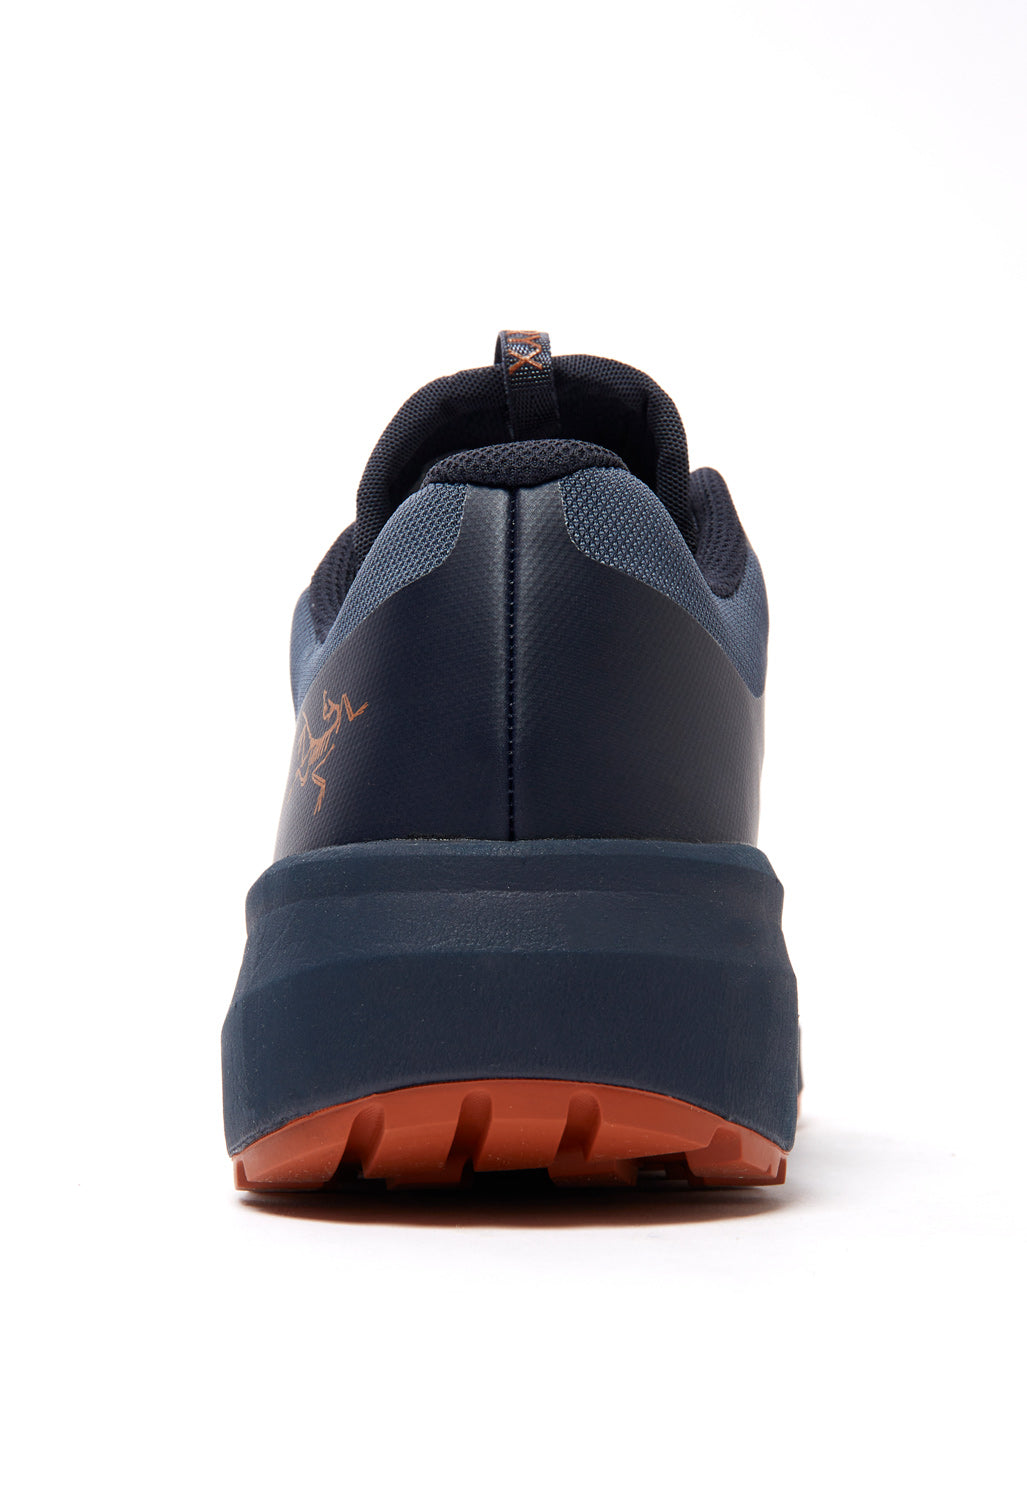 Arc'teryx Norvan LD 3 Men's Trail Shoes - Kingfisher/Fika